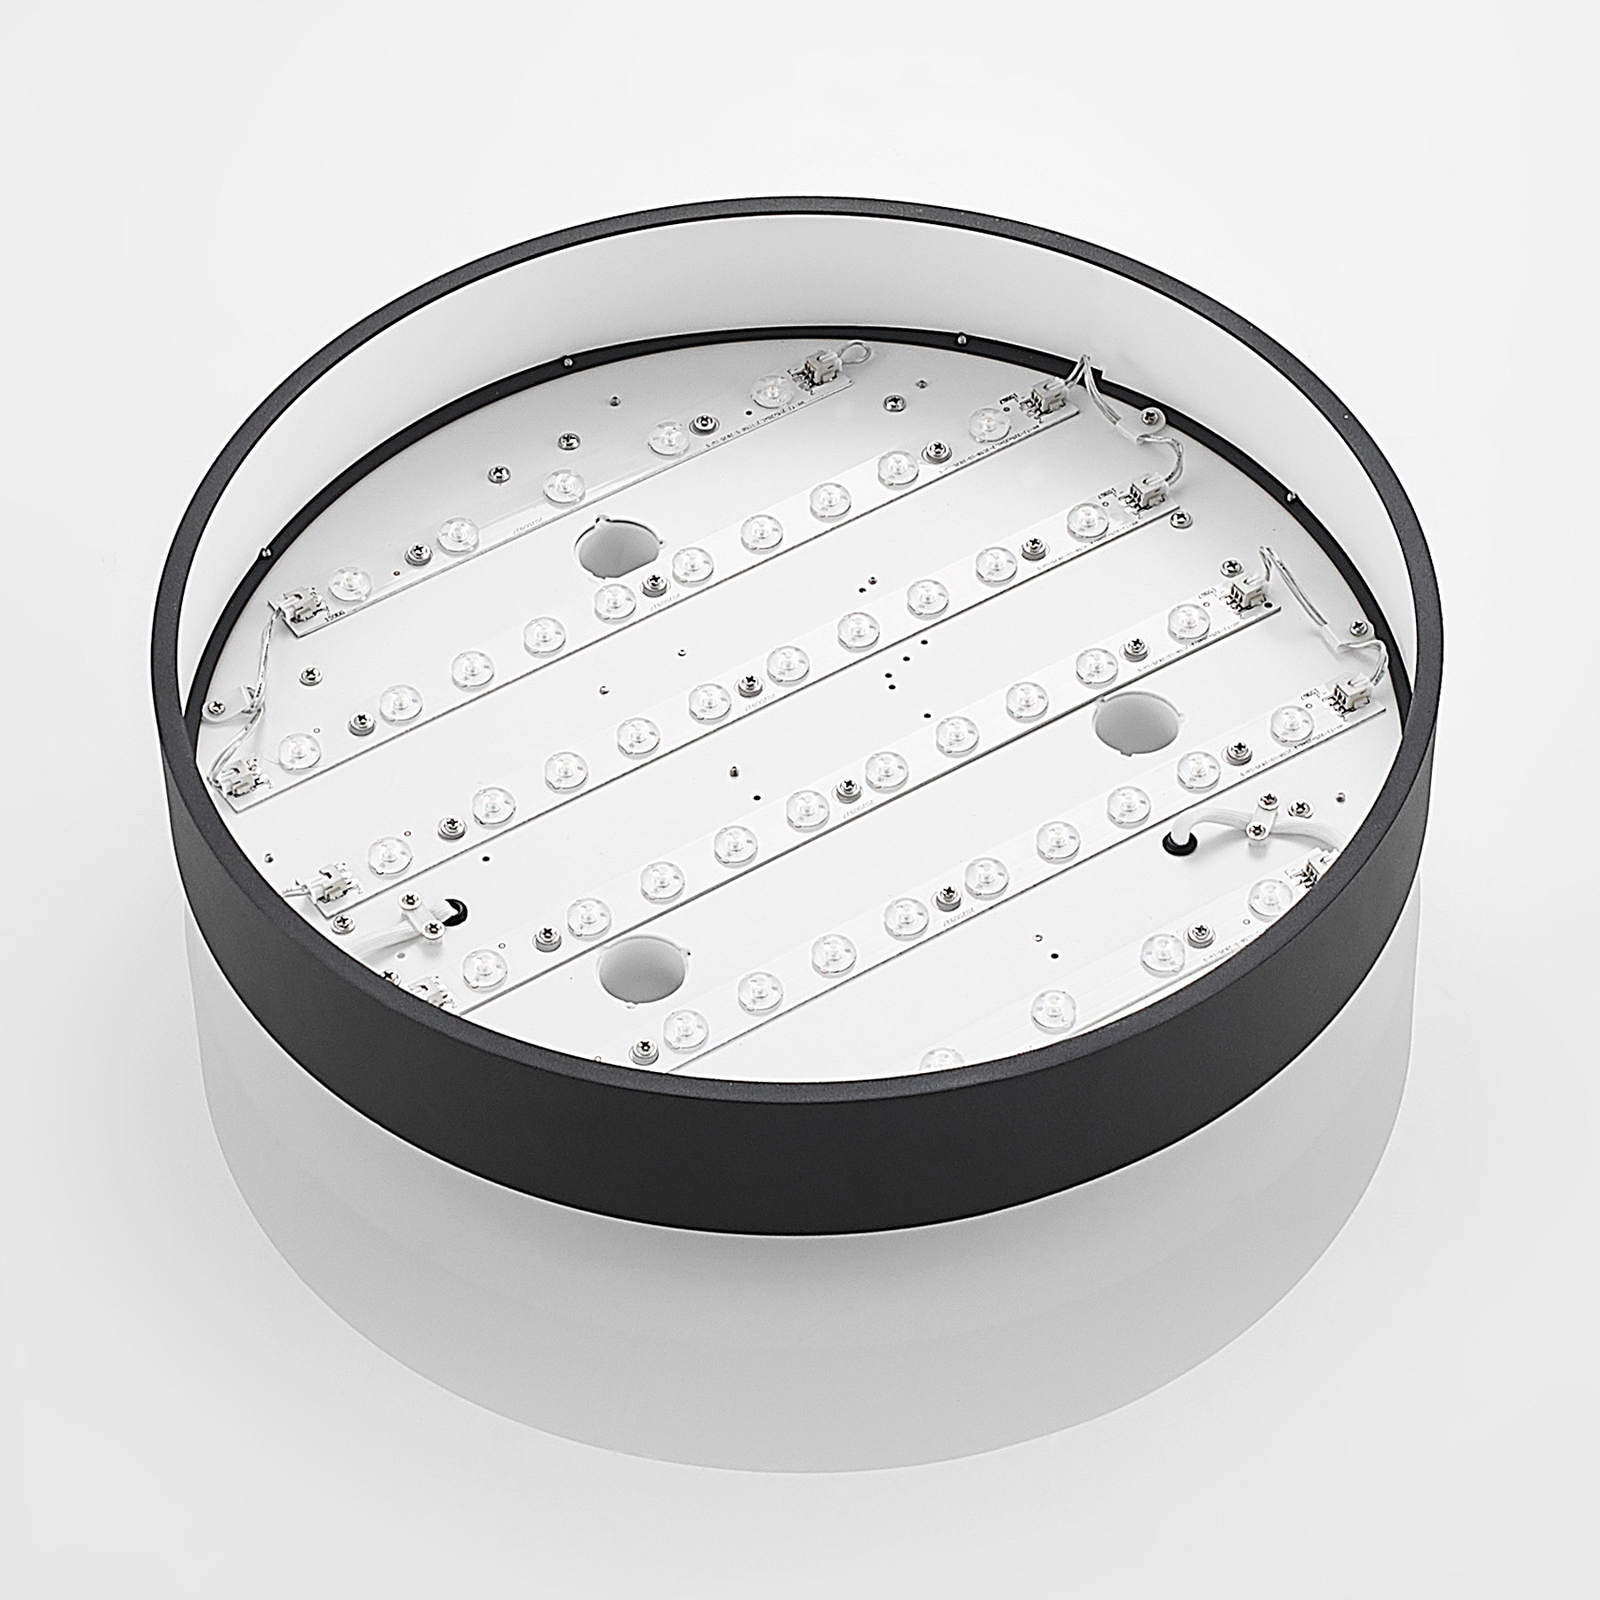 Arcchio Vanida LED-loftlampe, sort, 40 cm